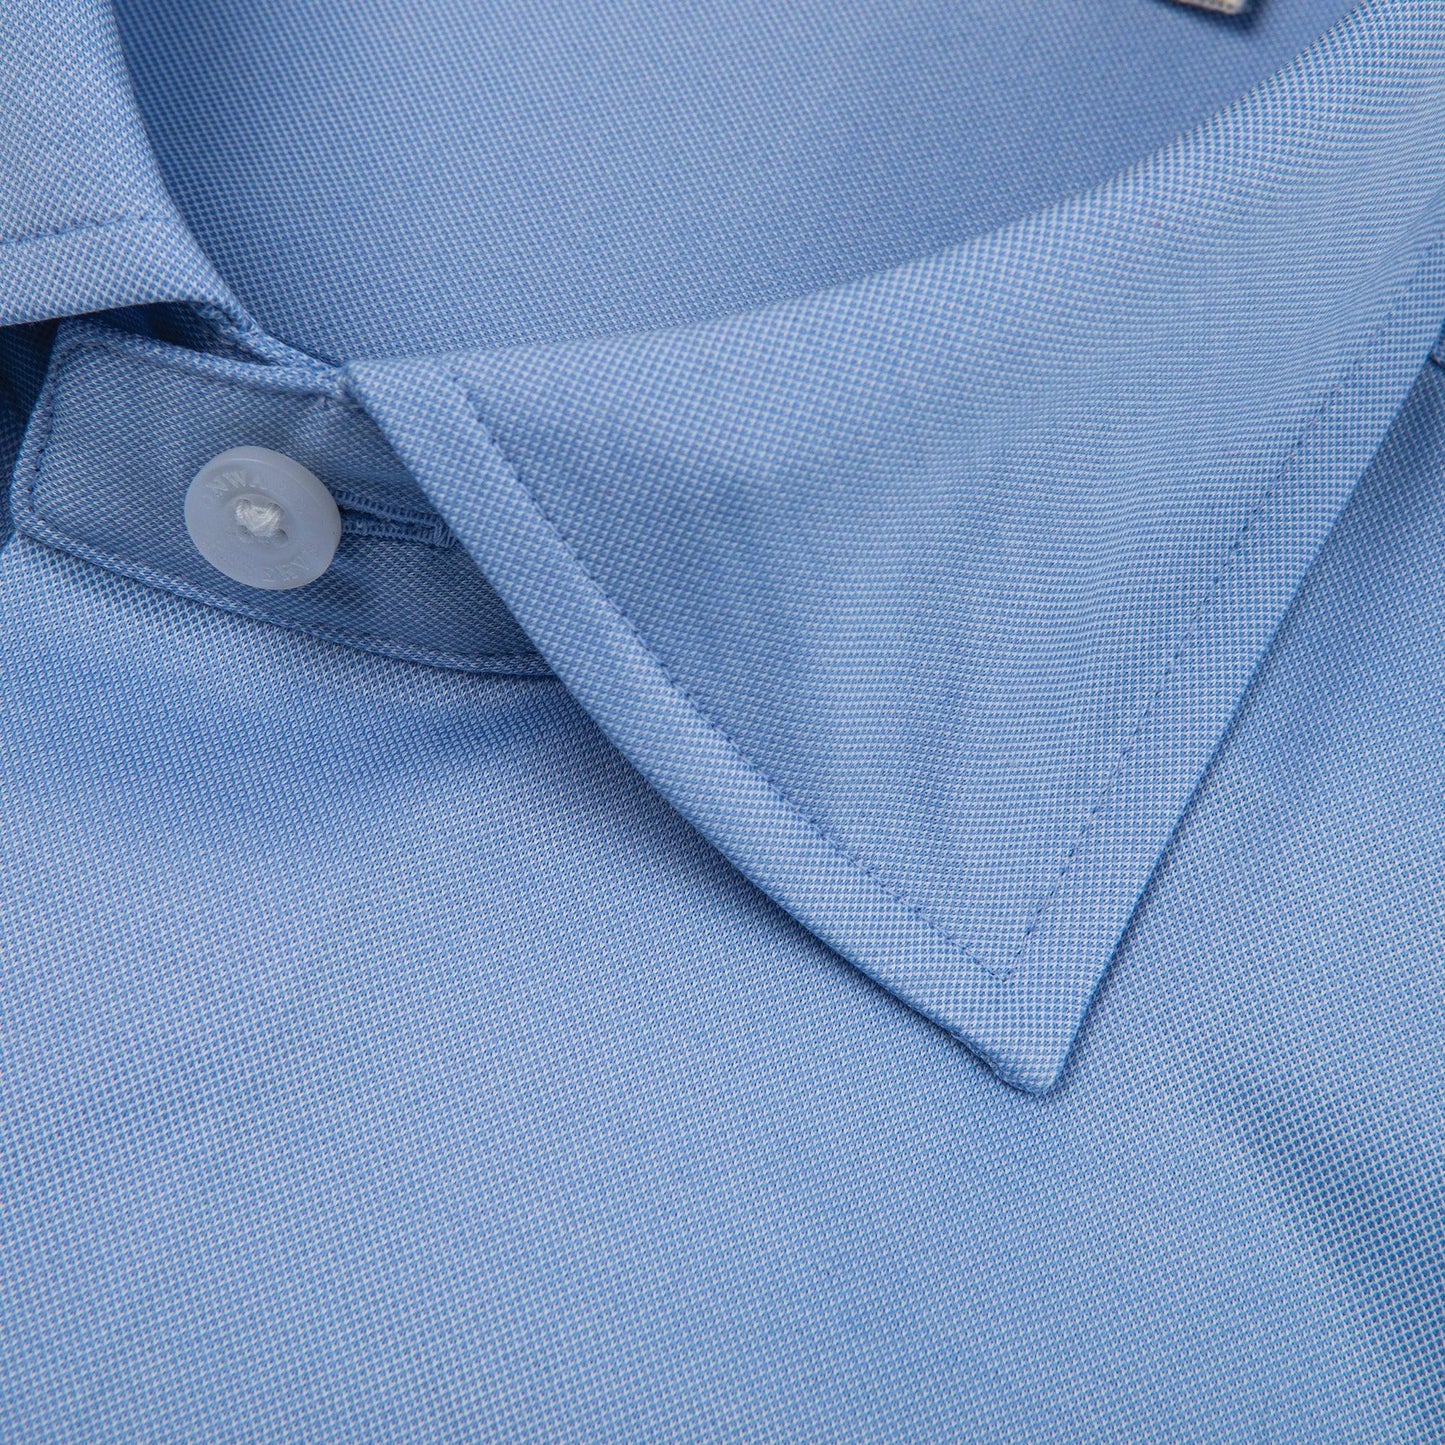 Knit Spread Collar Dress Shirt - Onward Reserve